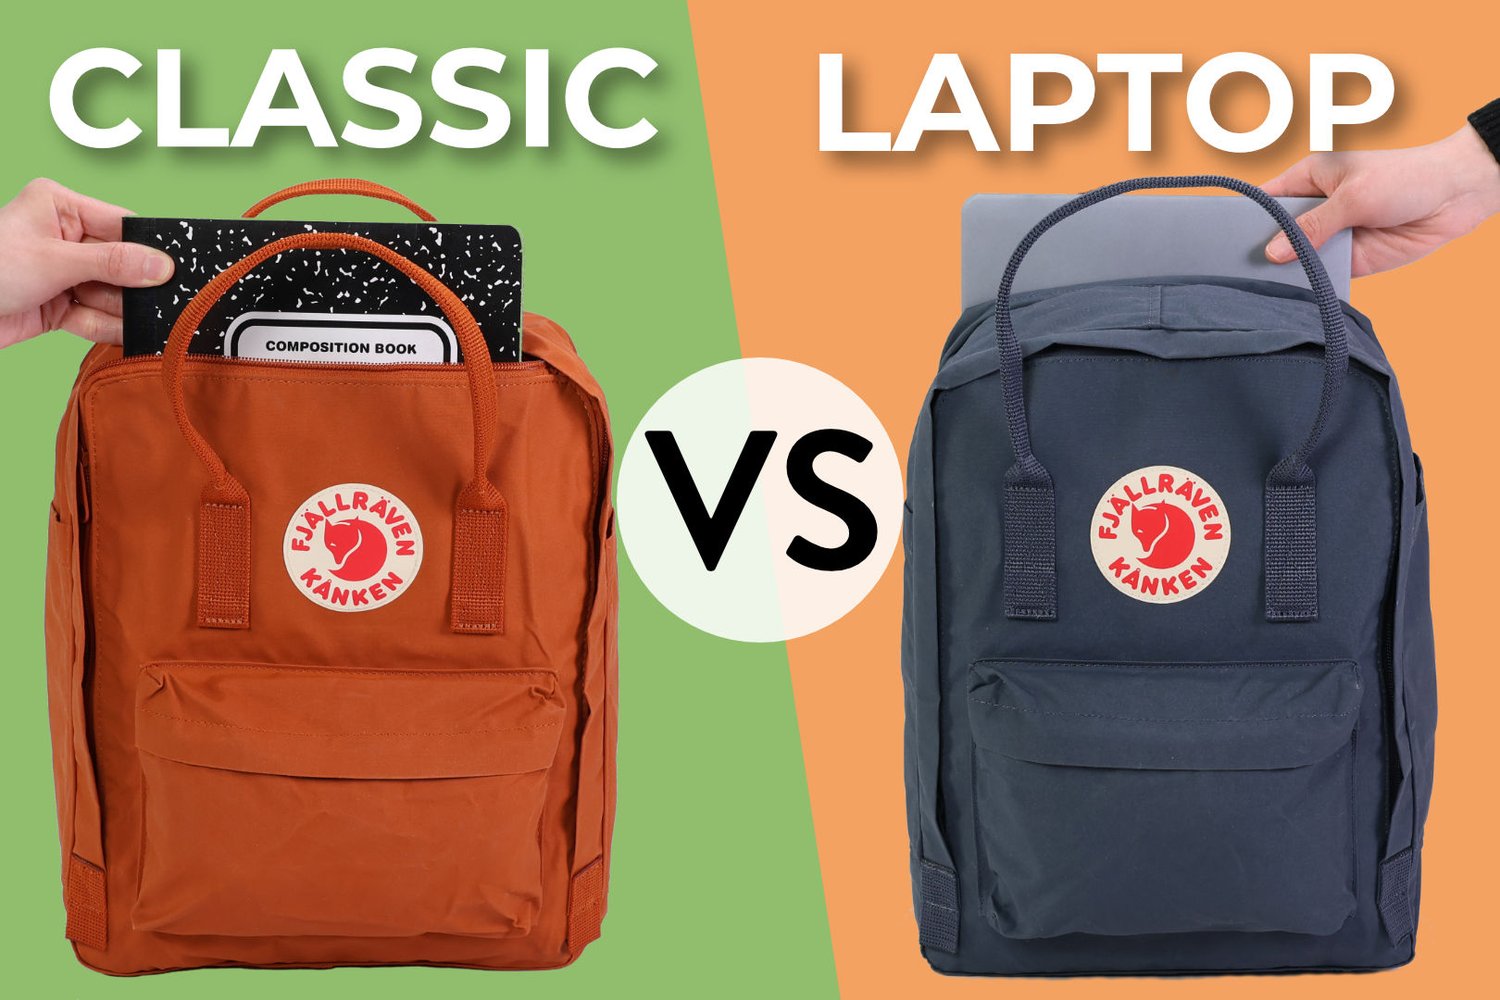 Fjallraven Kanken Classic vs Kanken Laptop (13", 15", 17") - What's the  difference? | Backpackies